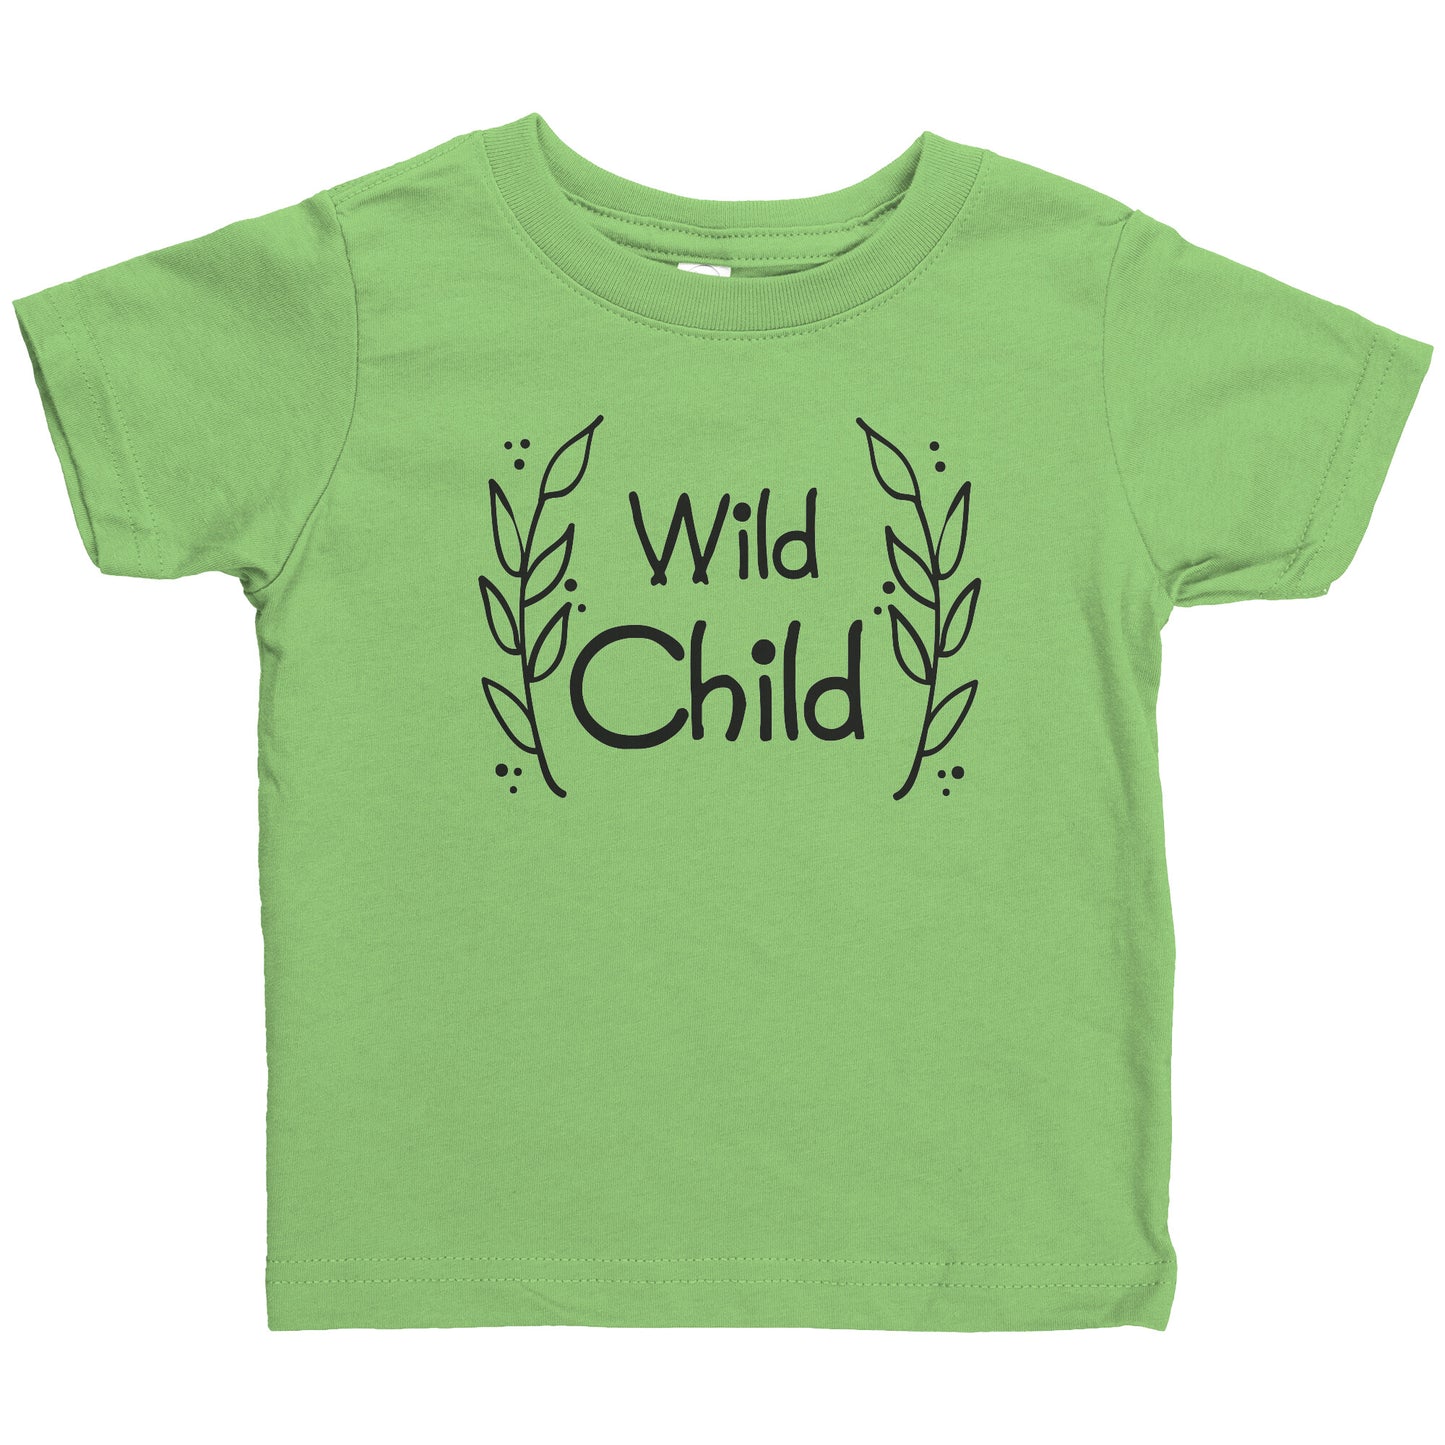 Wild Child Infant Shirt